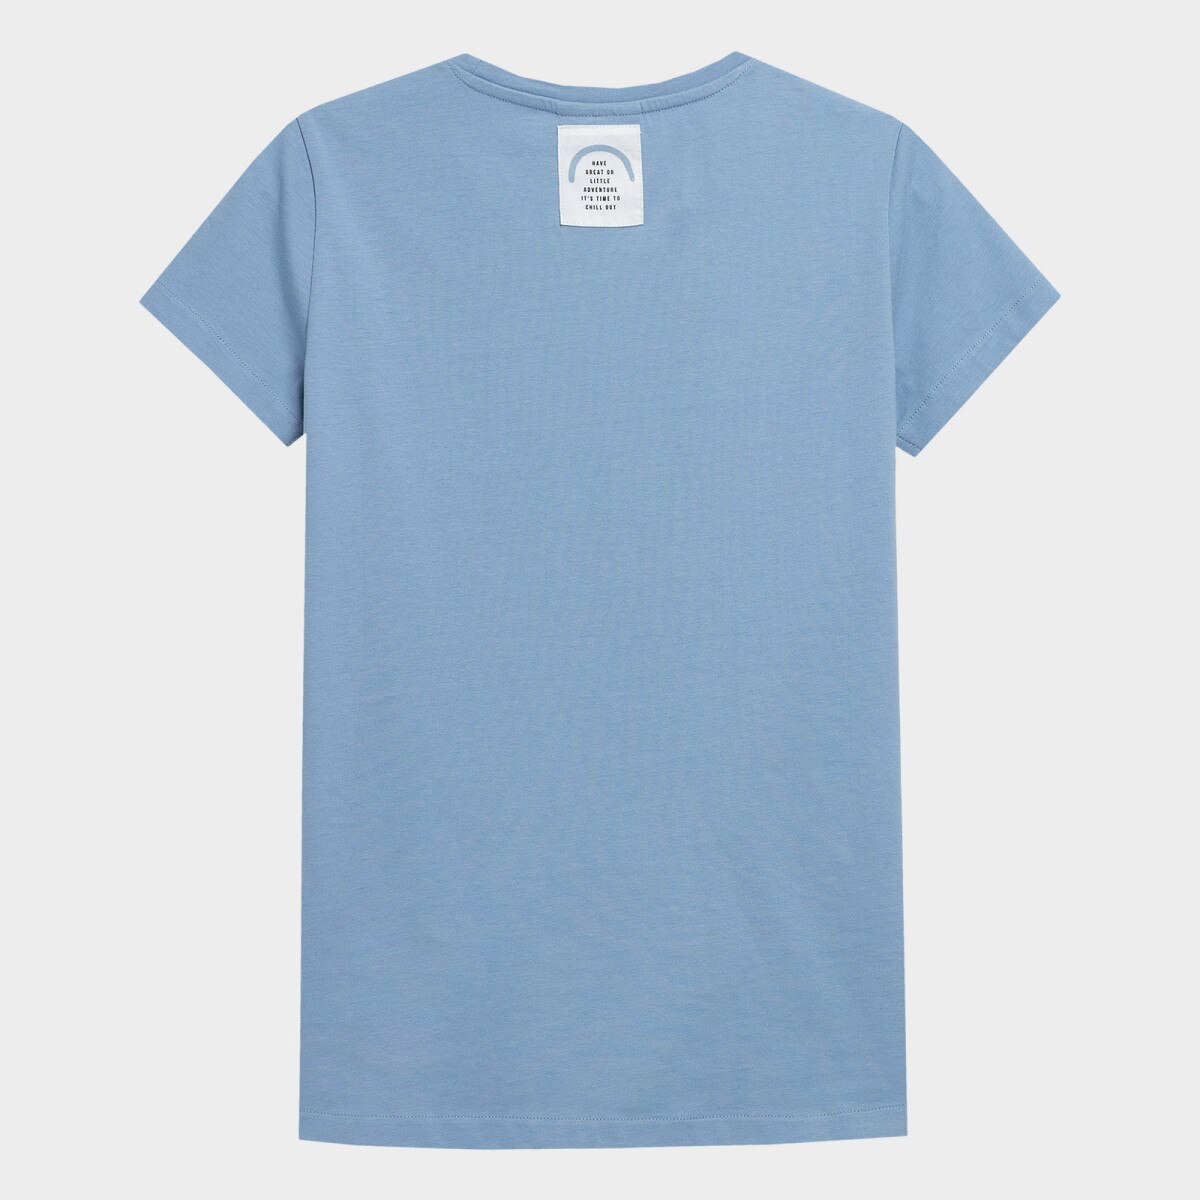 Outhorn Damska koszulka z nadrukiem OUTHORN TSD623 Niebieski 5